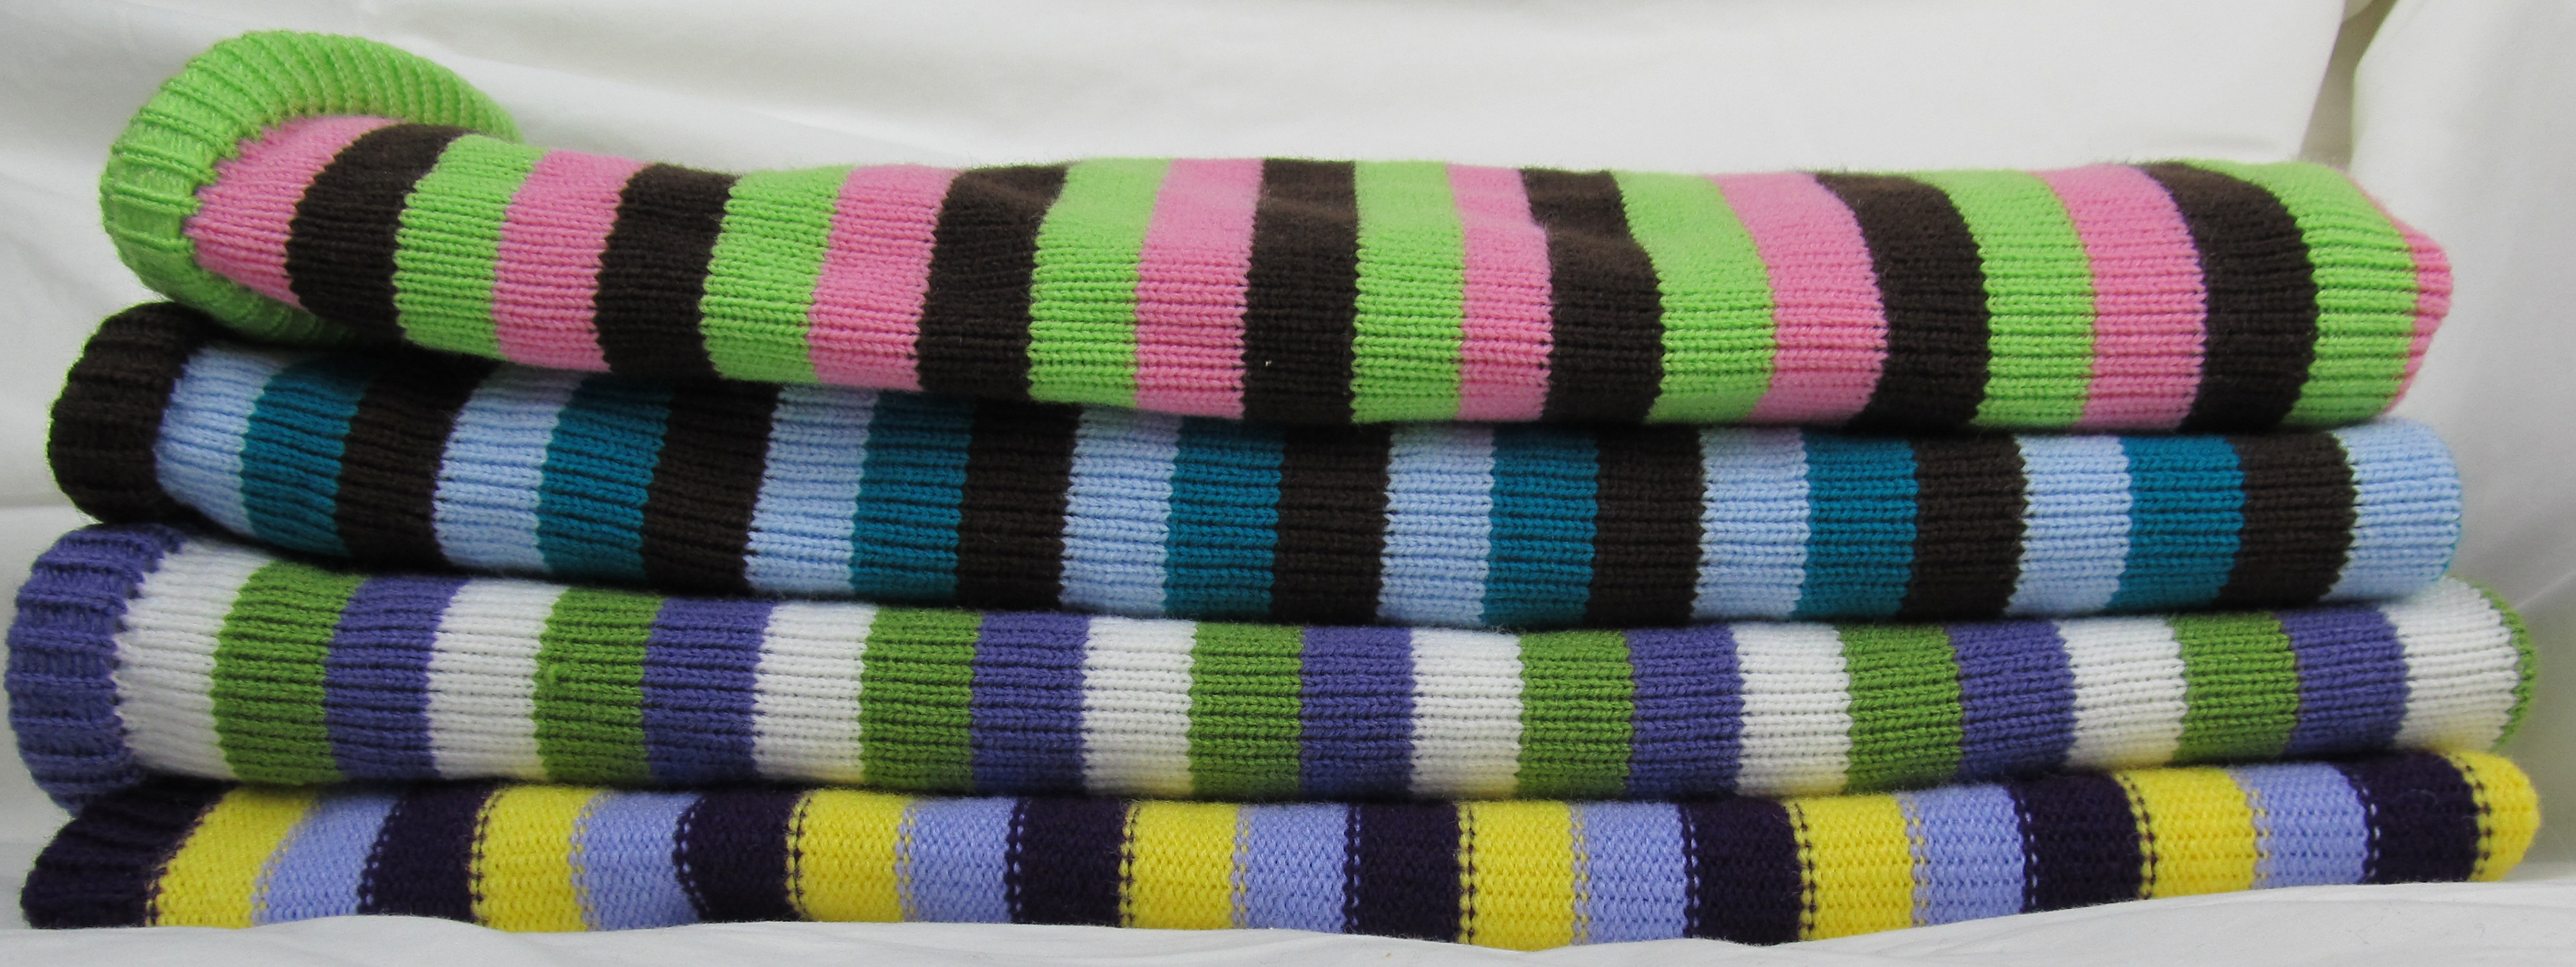 Machine Knit Baby Blanket Pattern Ba Shower Crafting Free Video Tutorial Machine Knitted Ba